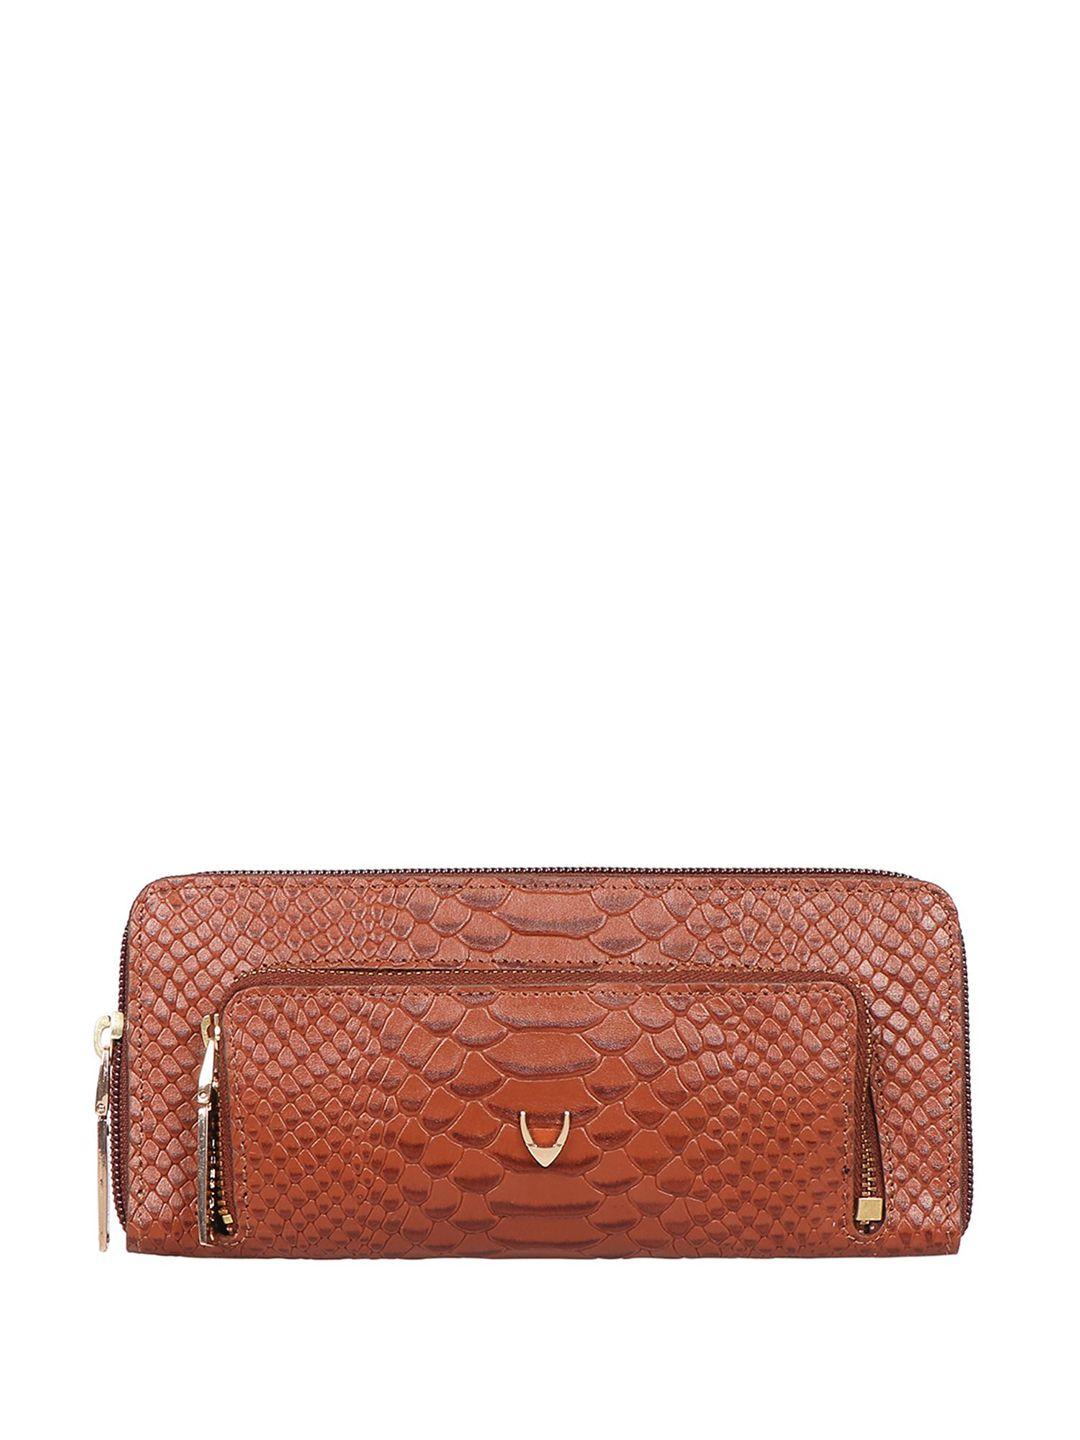 hidesign textured leather purse clutch